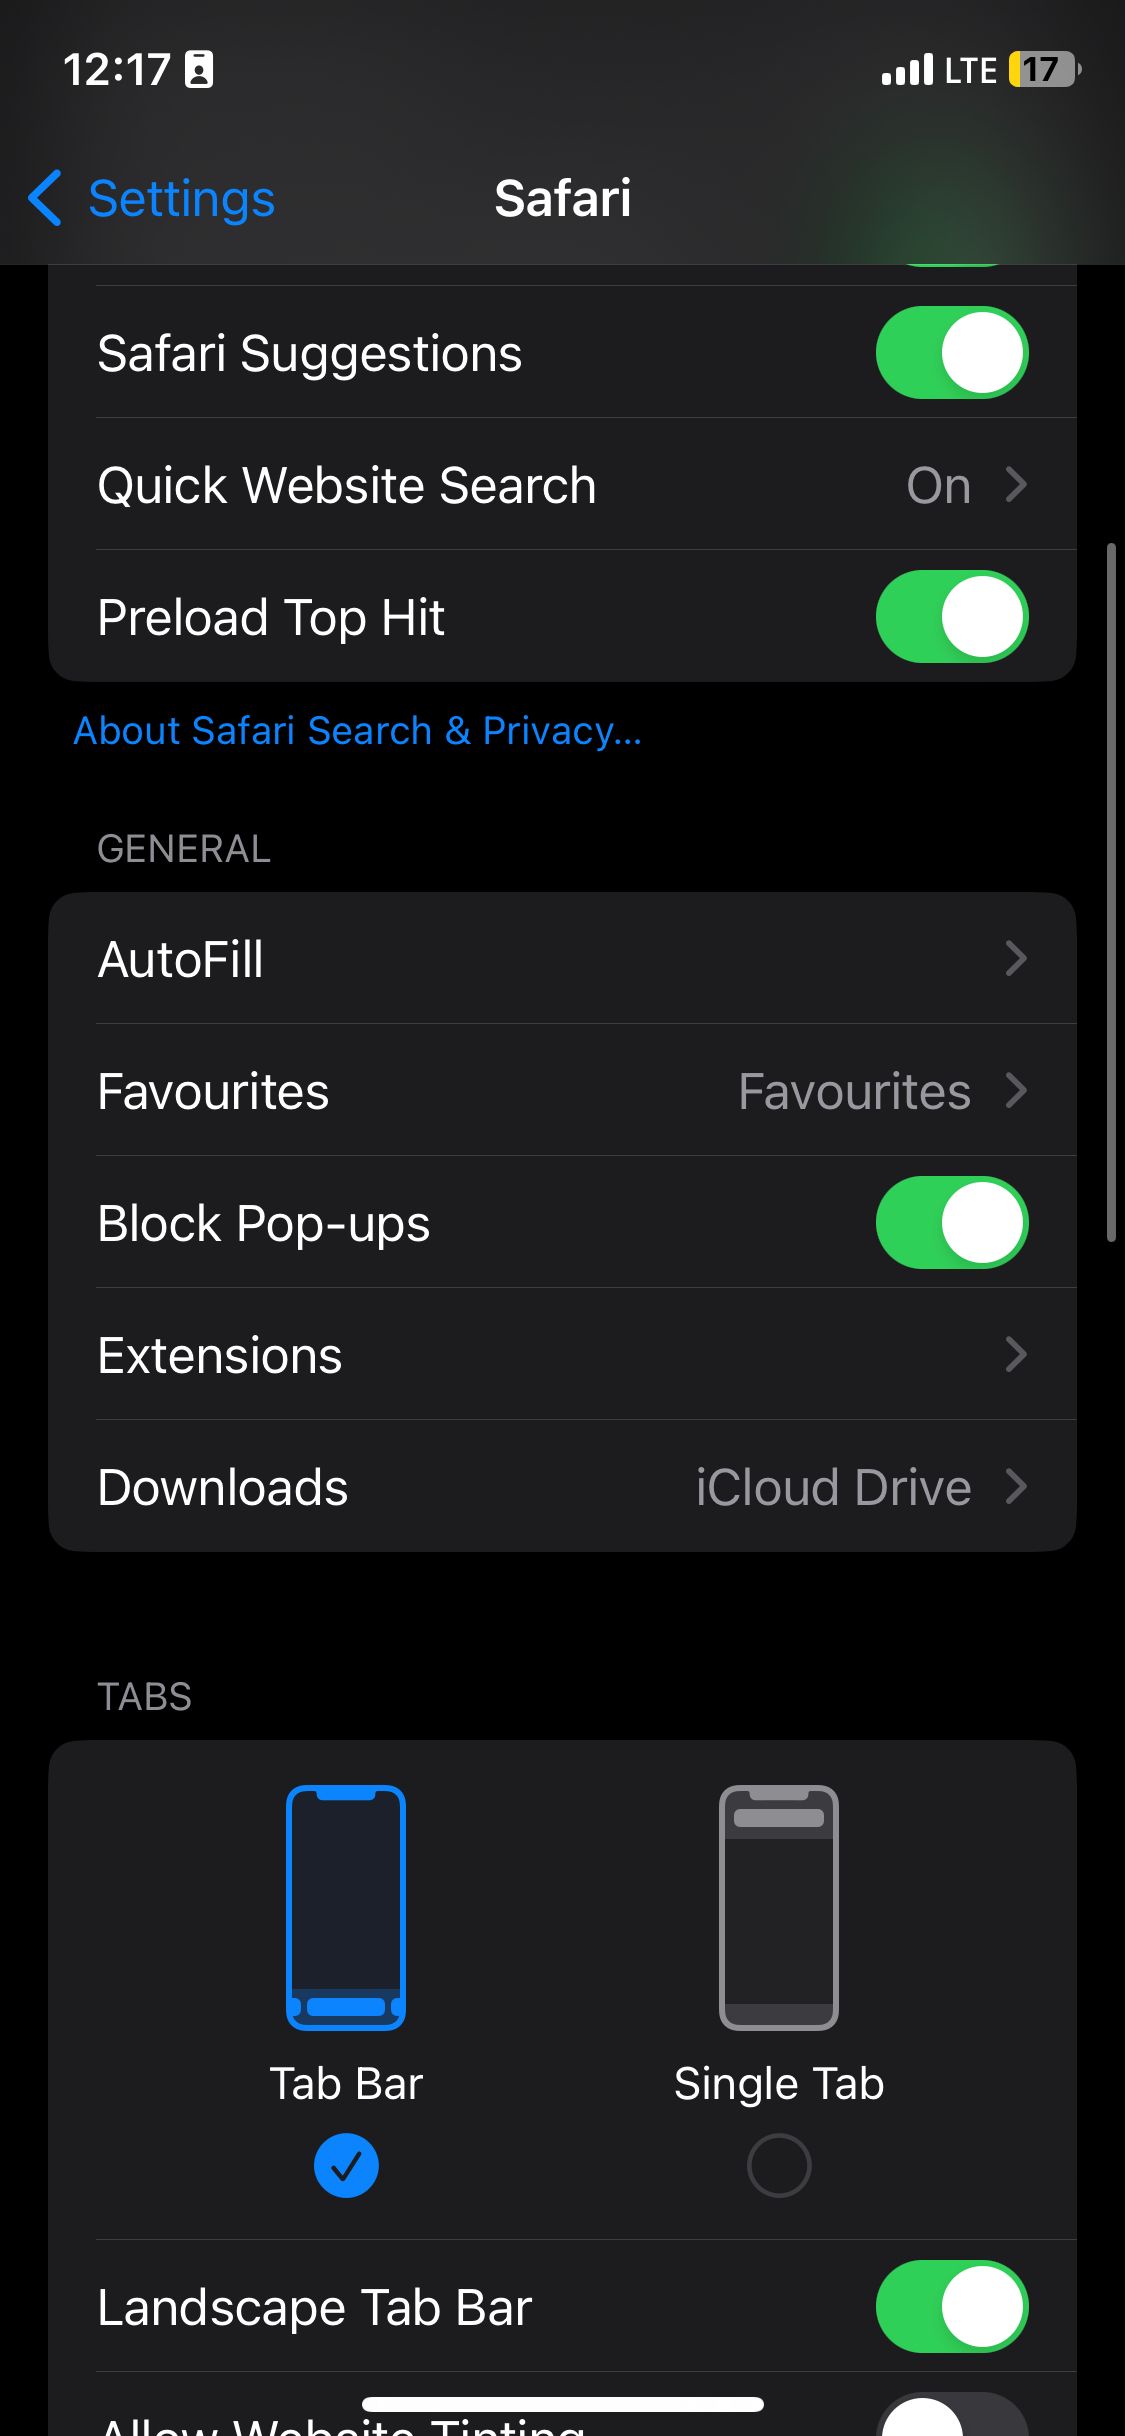 Safari settings with pop-up blocker button